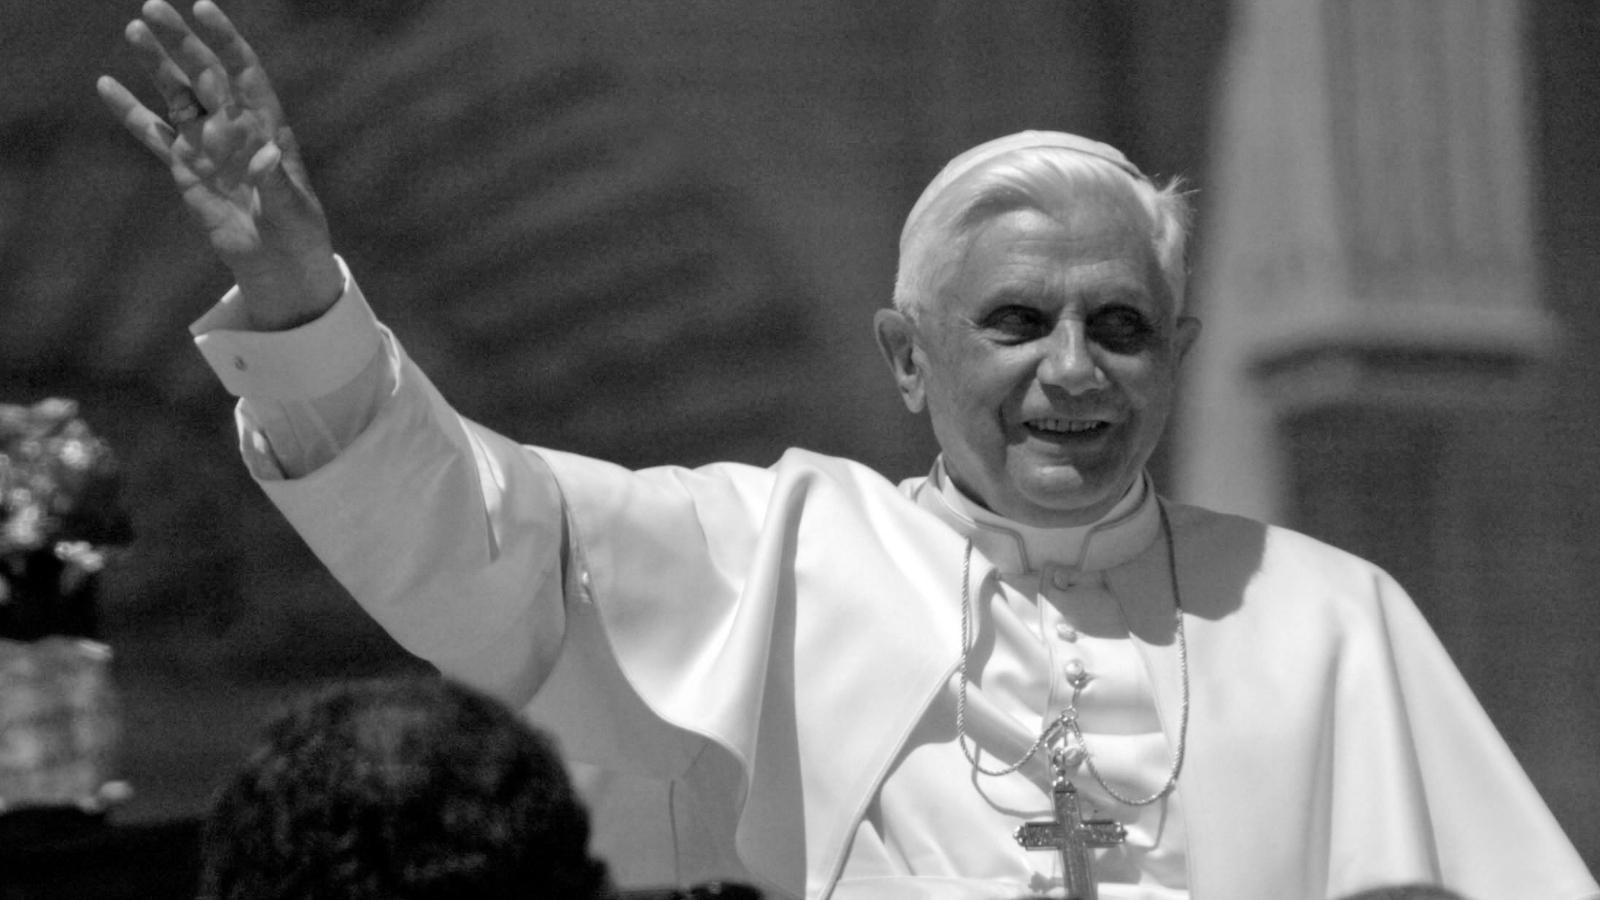 Generalaudienz mit Papst Benedikt XVI. auf dem Petersplatz in Rom am 27. April 2005.